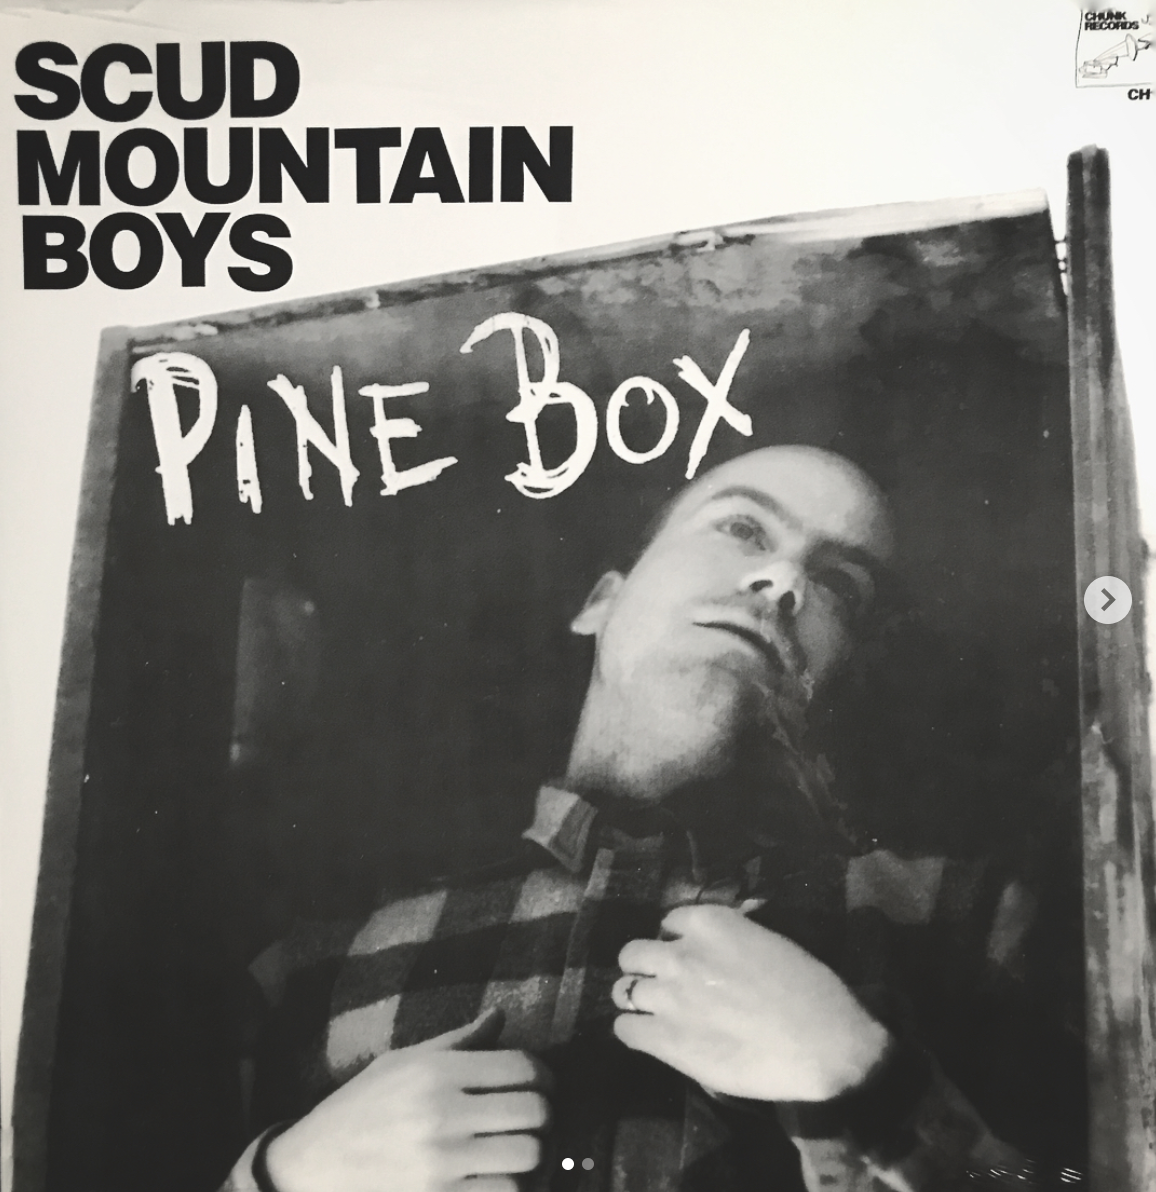 scud mountain boys pine box vinyl lp cover alt country americana